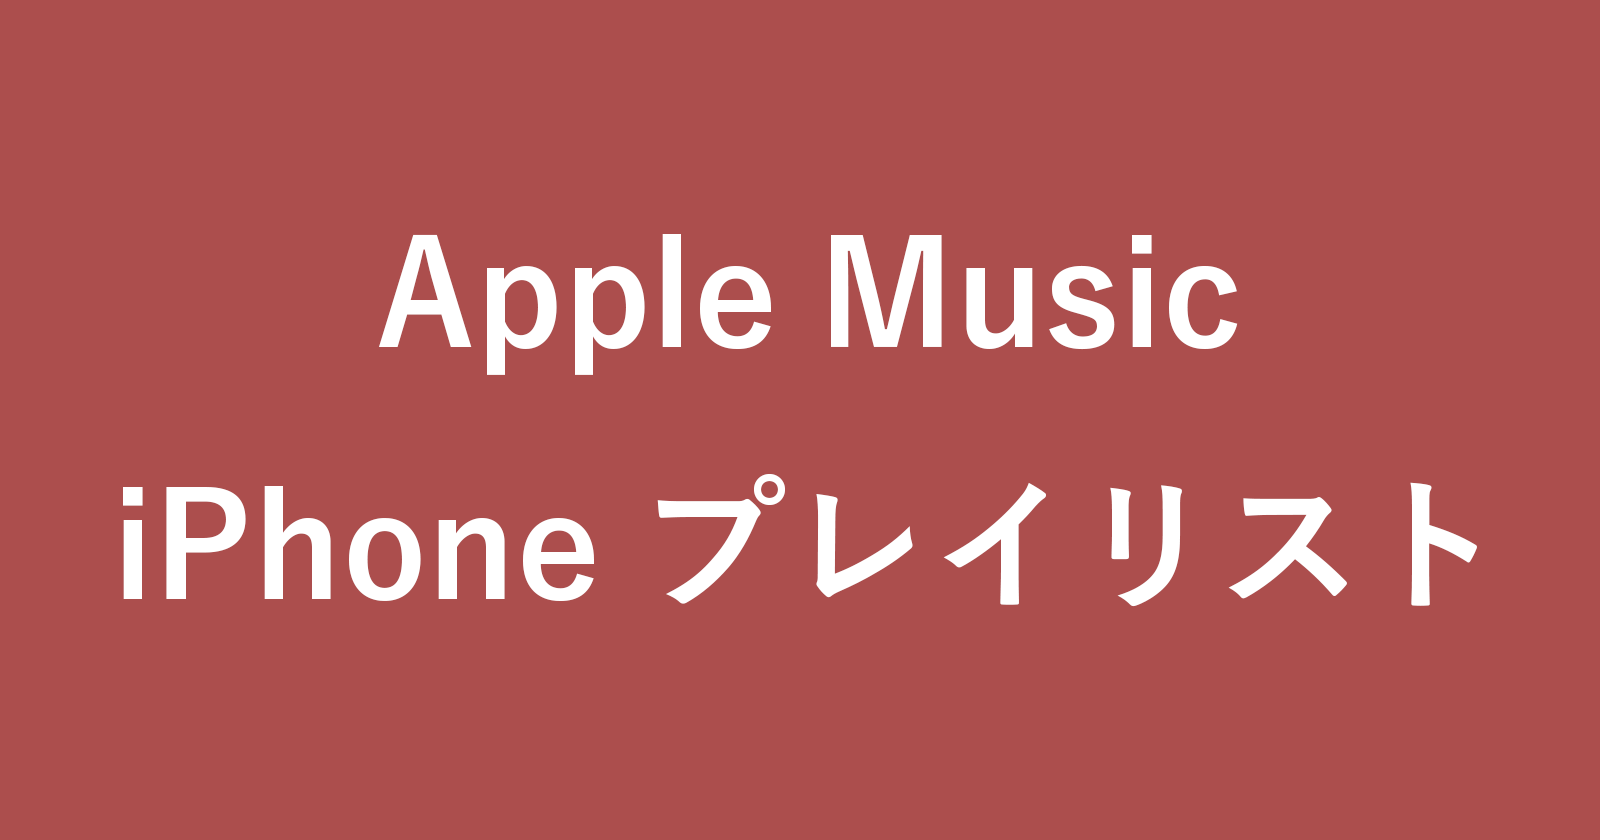 apple music iphone playlist